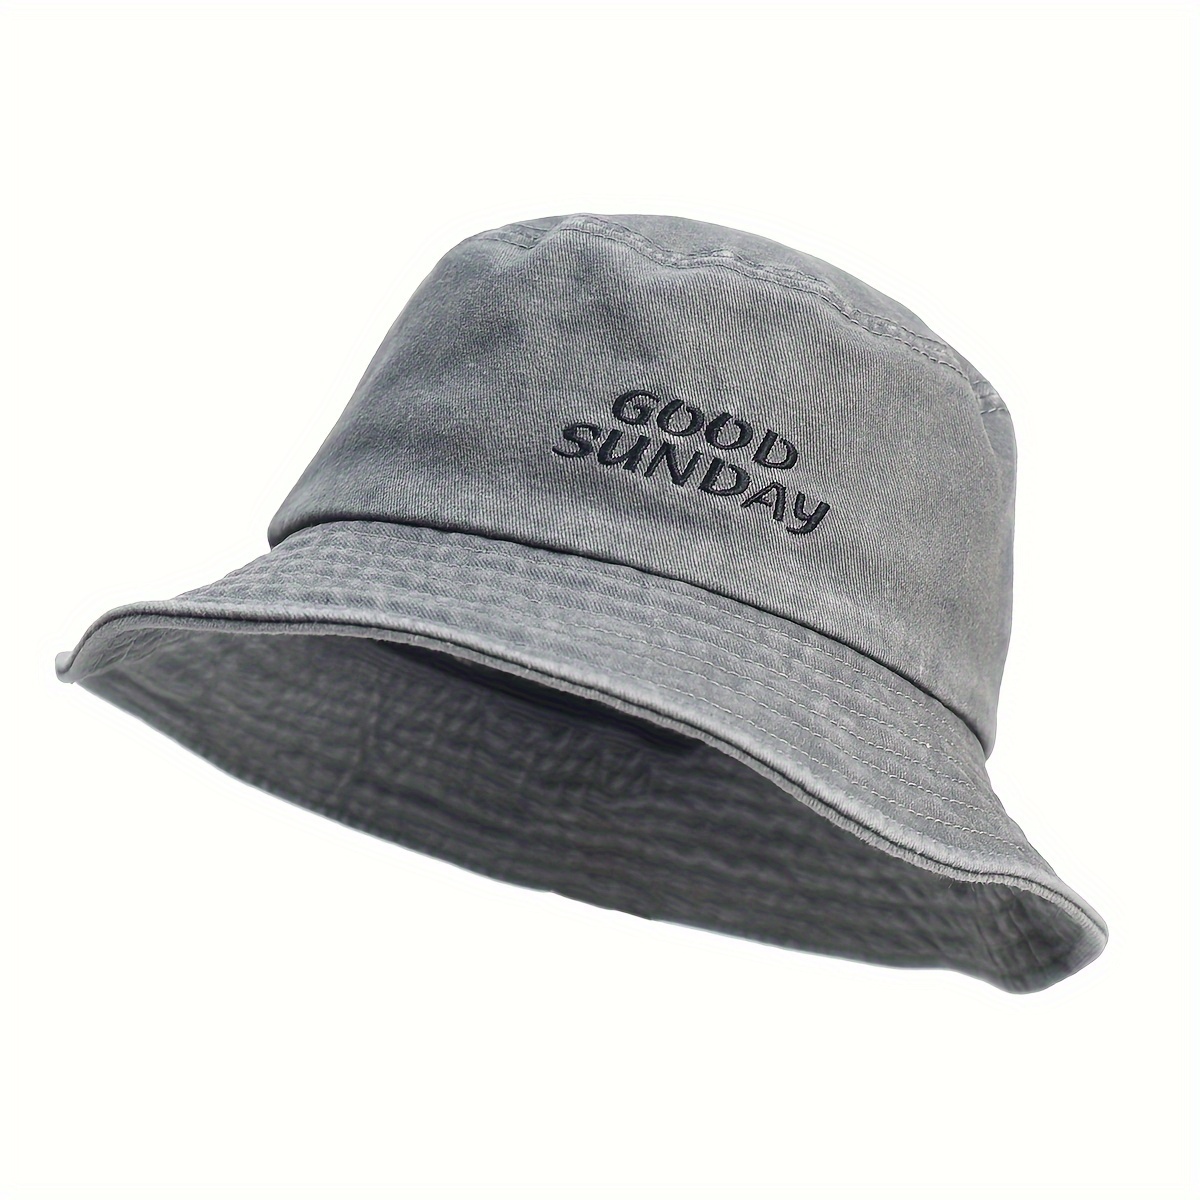 Embroidered Fishing Hat, Men's Fisherman Hat, Men's Sunscreen Hat